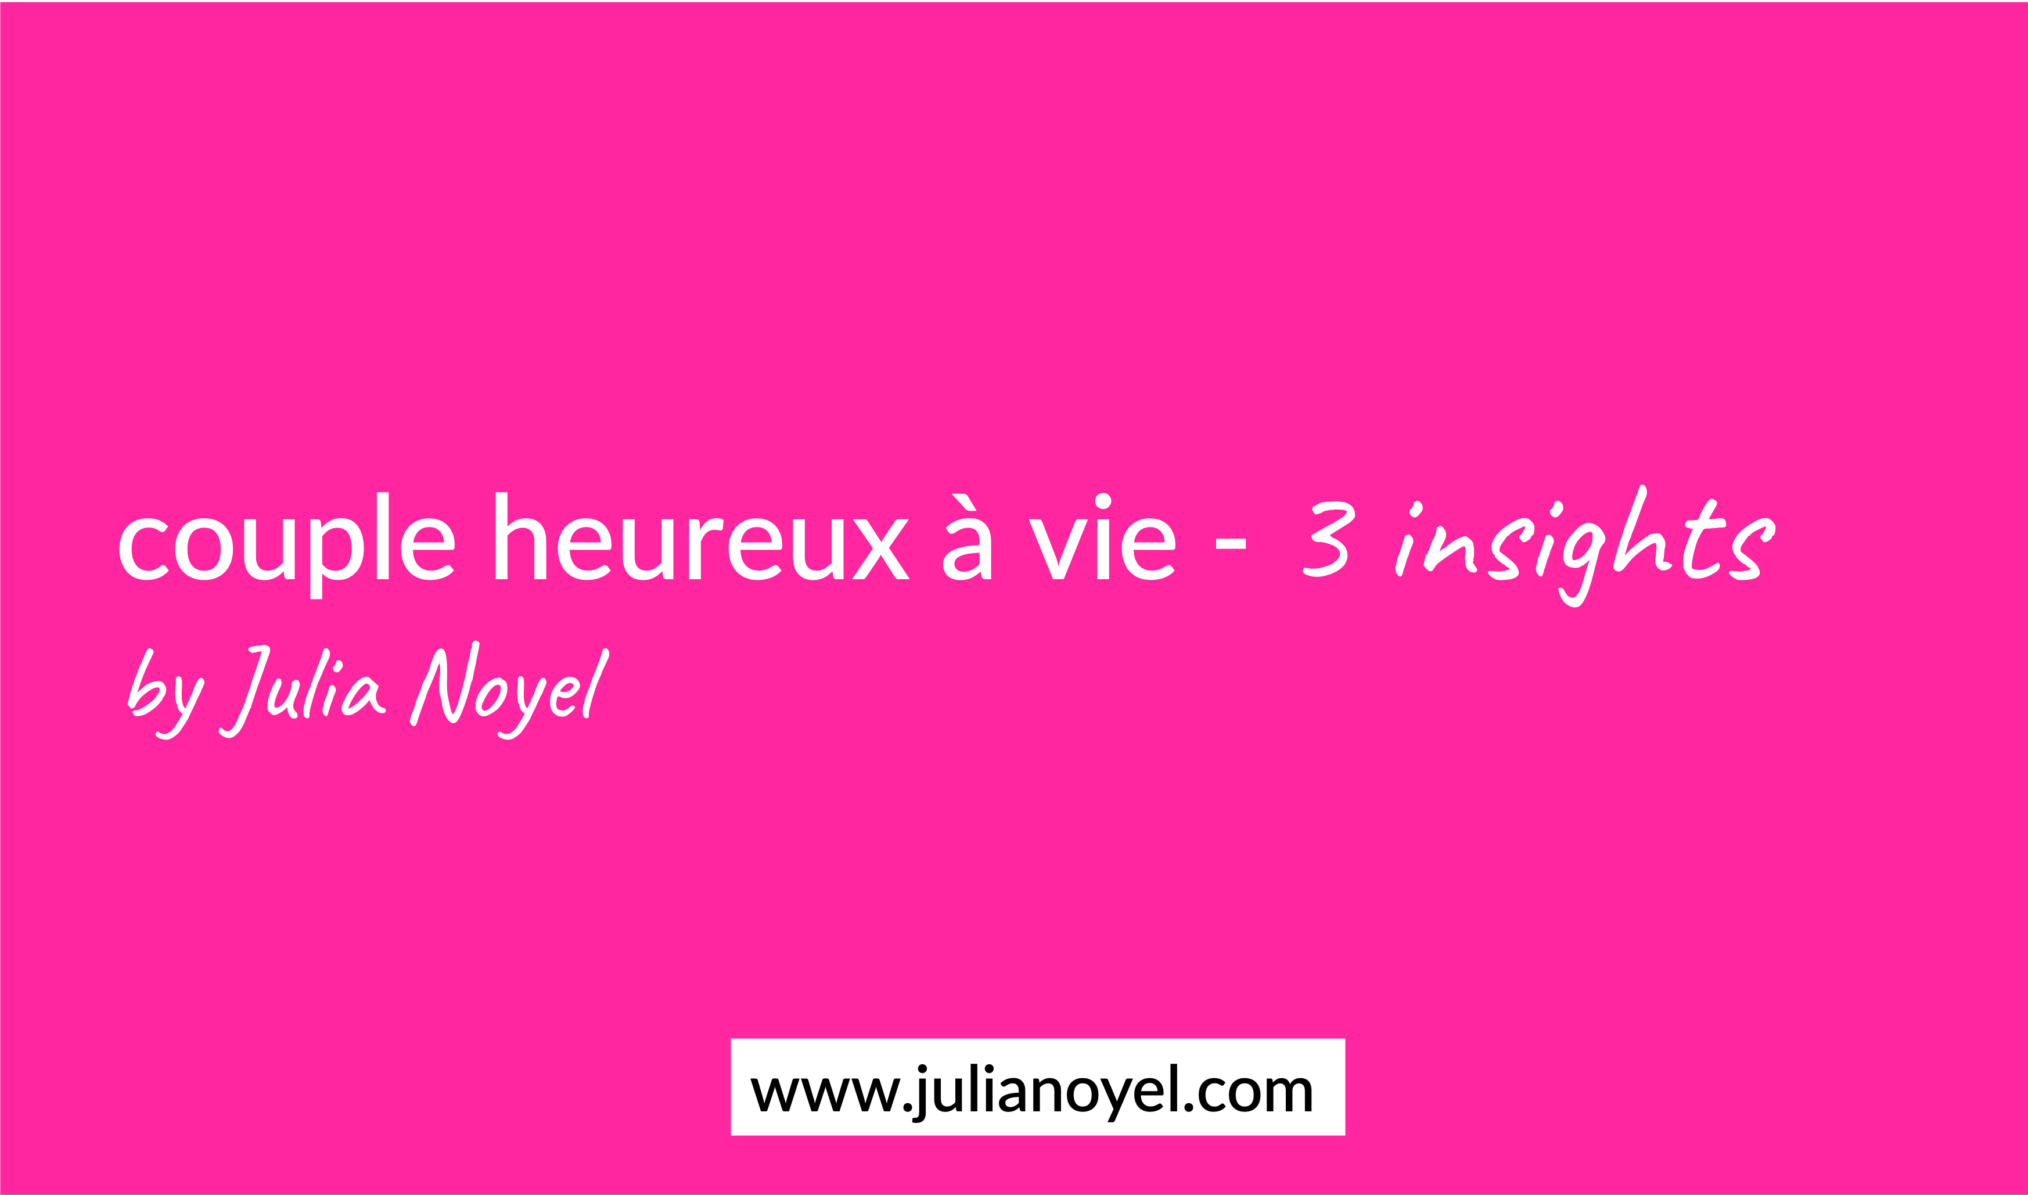 couple heureux à vie - 3 insights by Julia Noyel